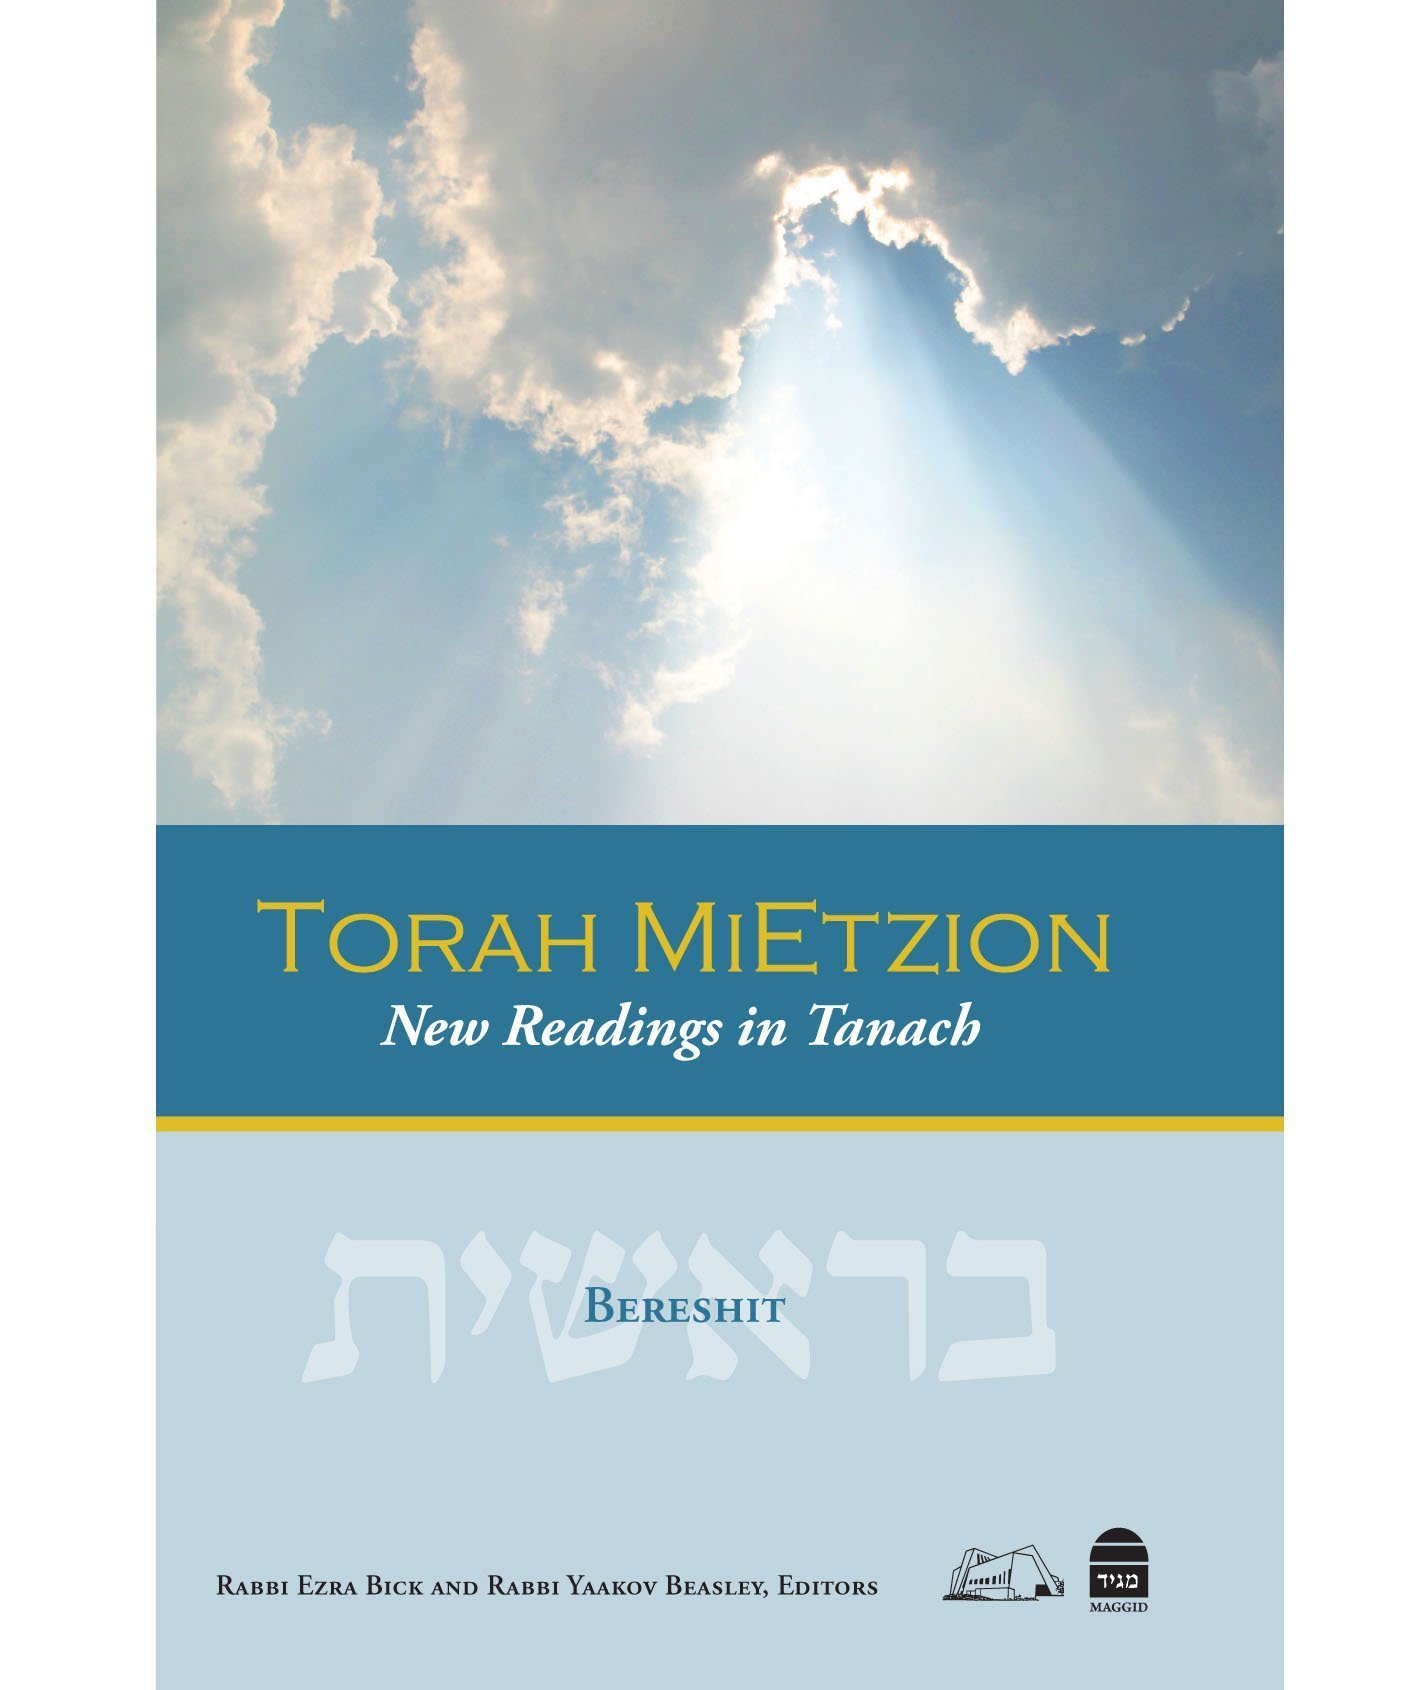 Torahmieziyon 1 1.jpg